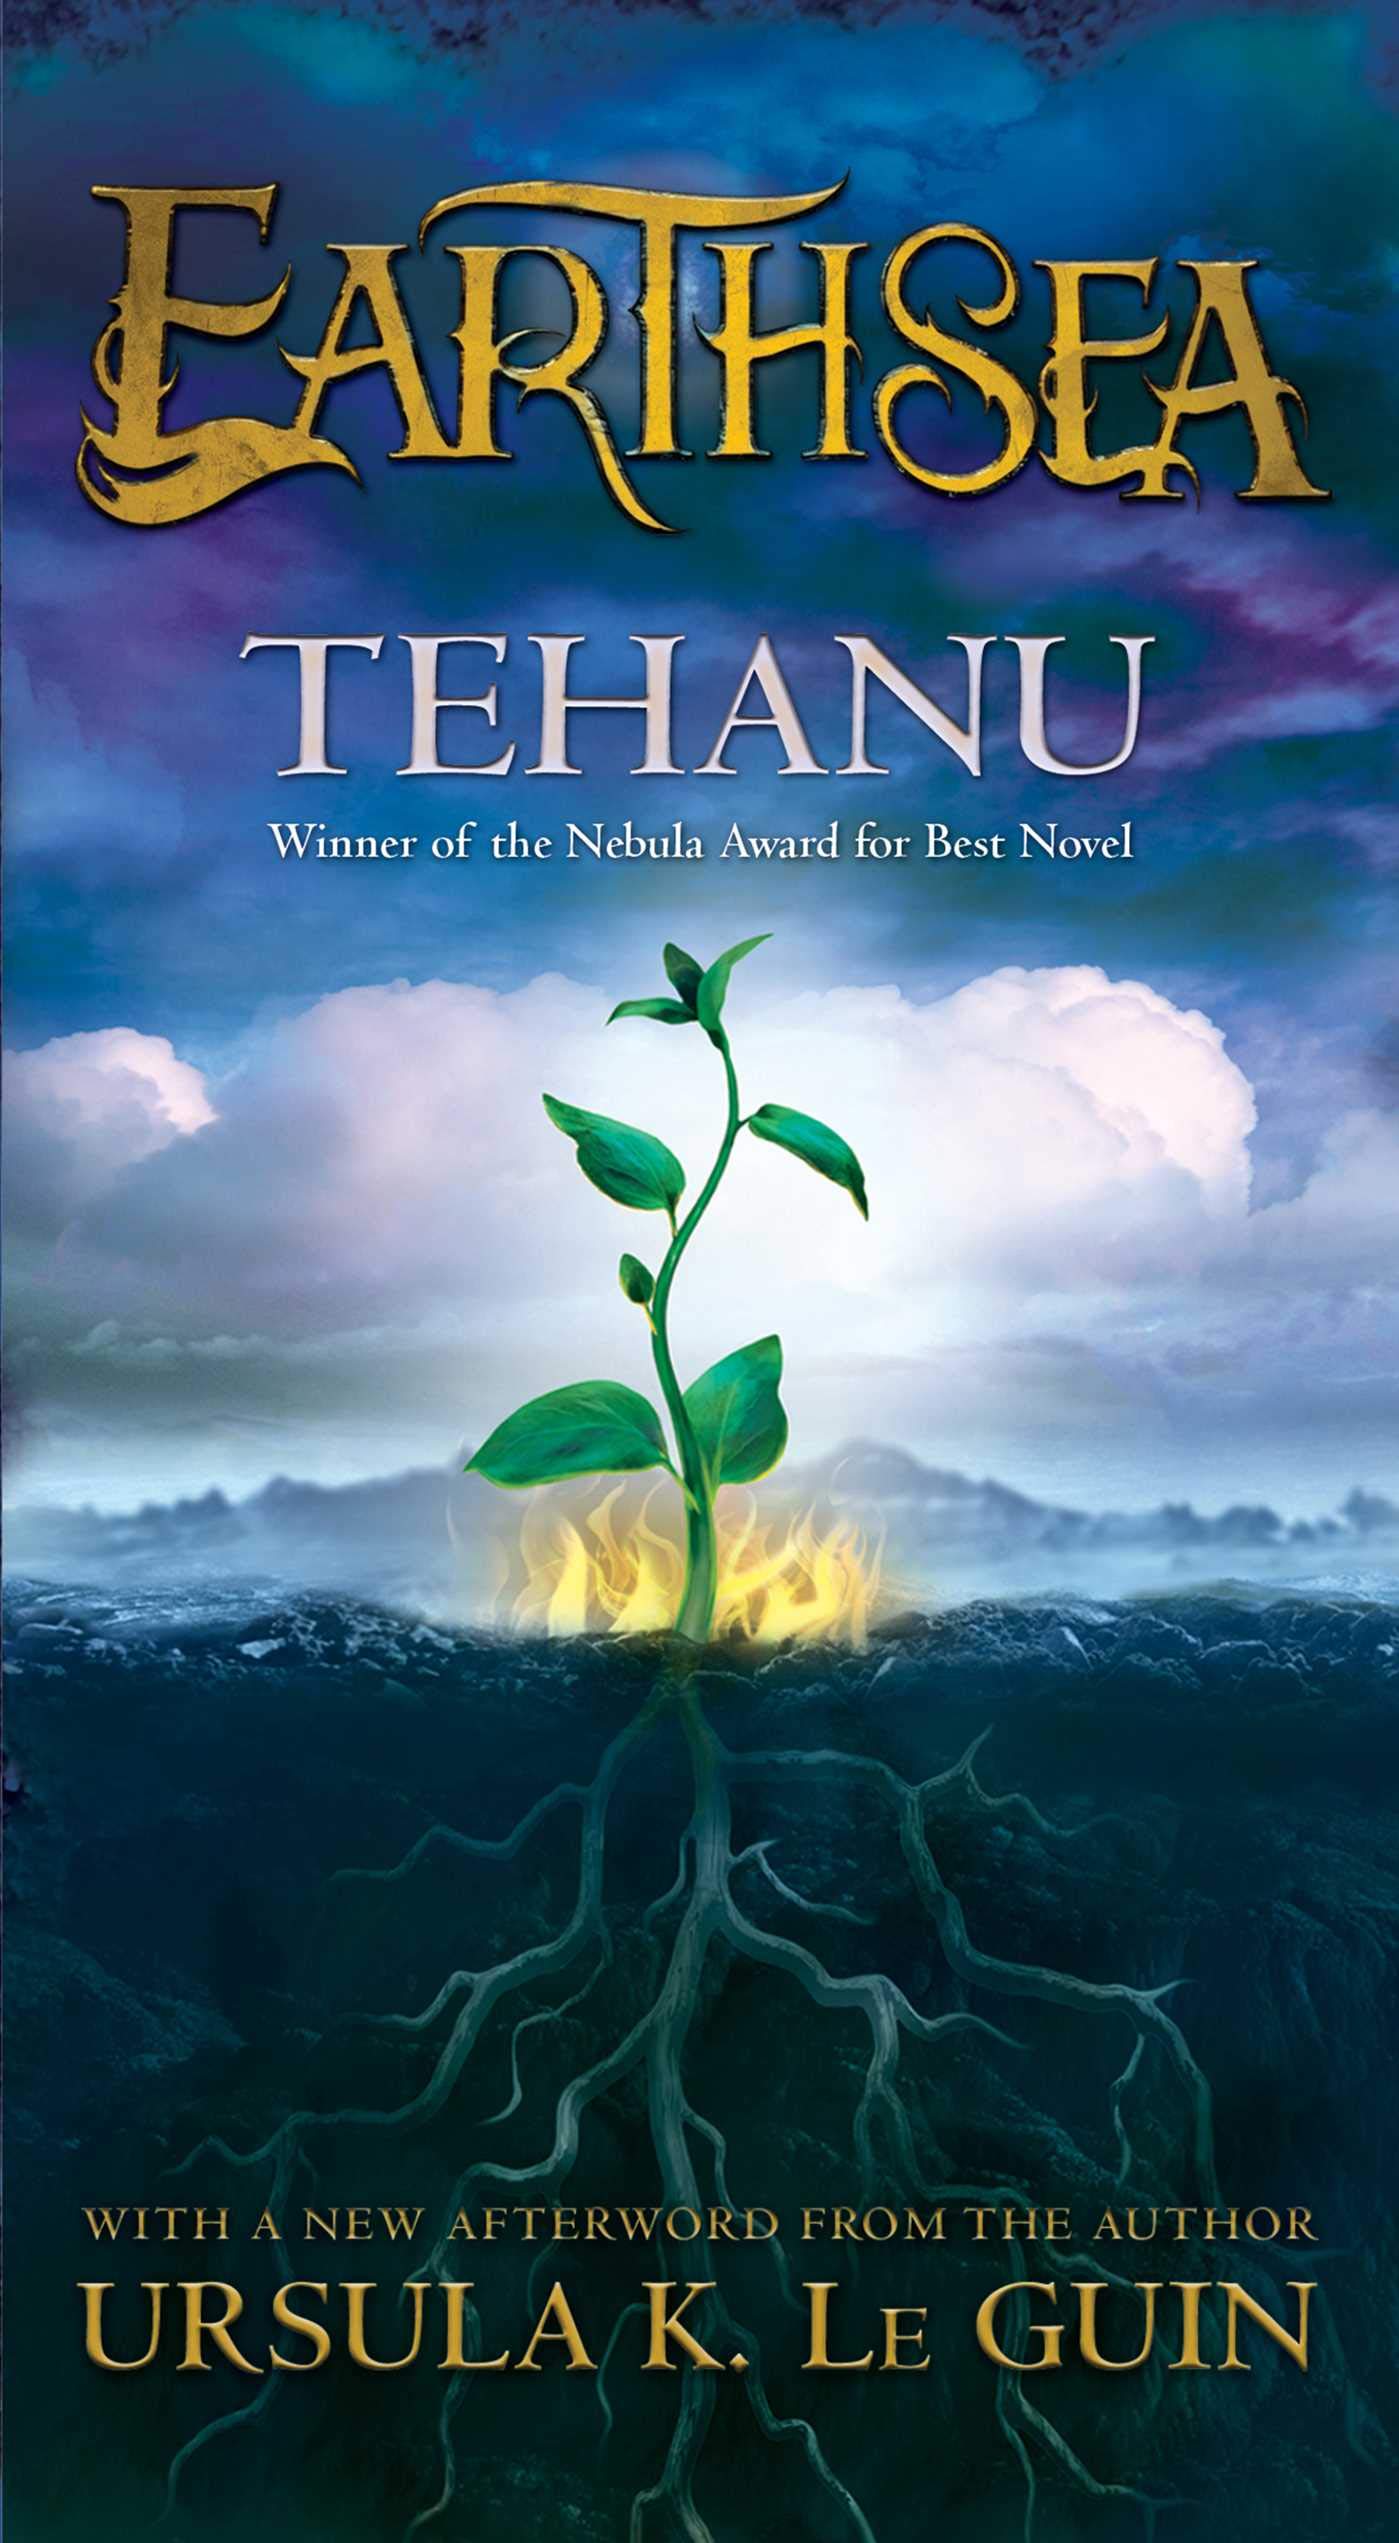 Tehanu: Book Four (The Earthsea Cycle Series 4)